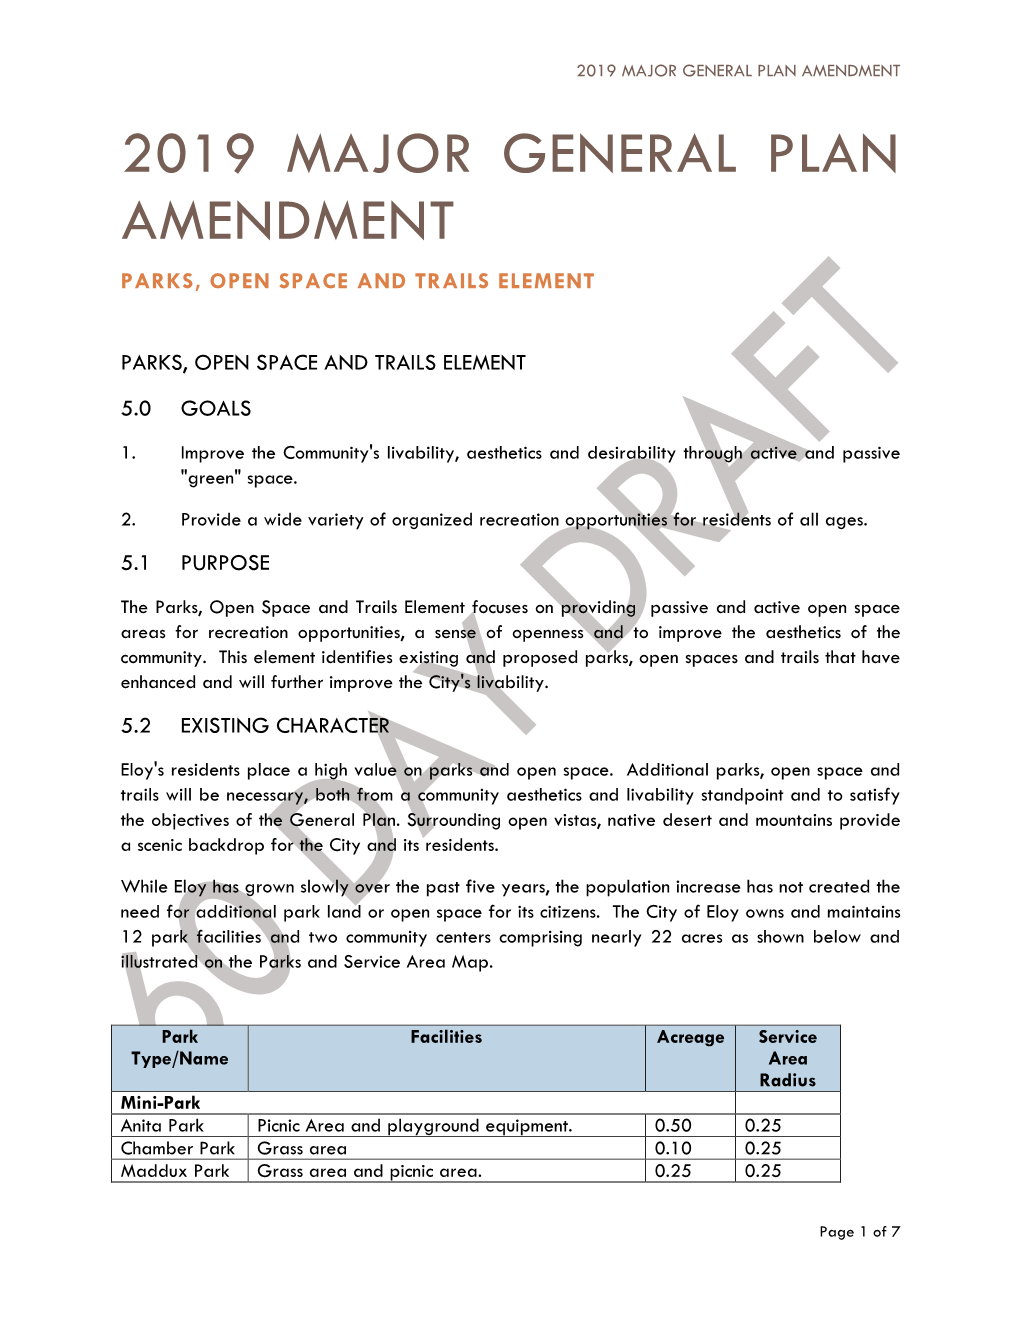 2019 Major General Plan Amendment 2019 Major General Plan Amendment Parks, Open Space and Trails Element